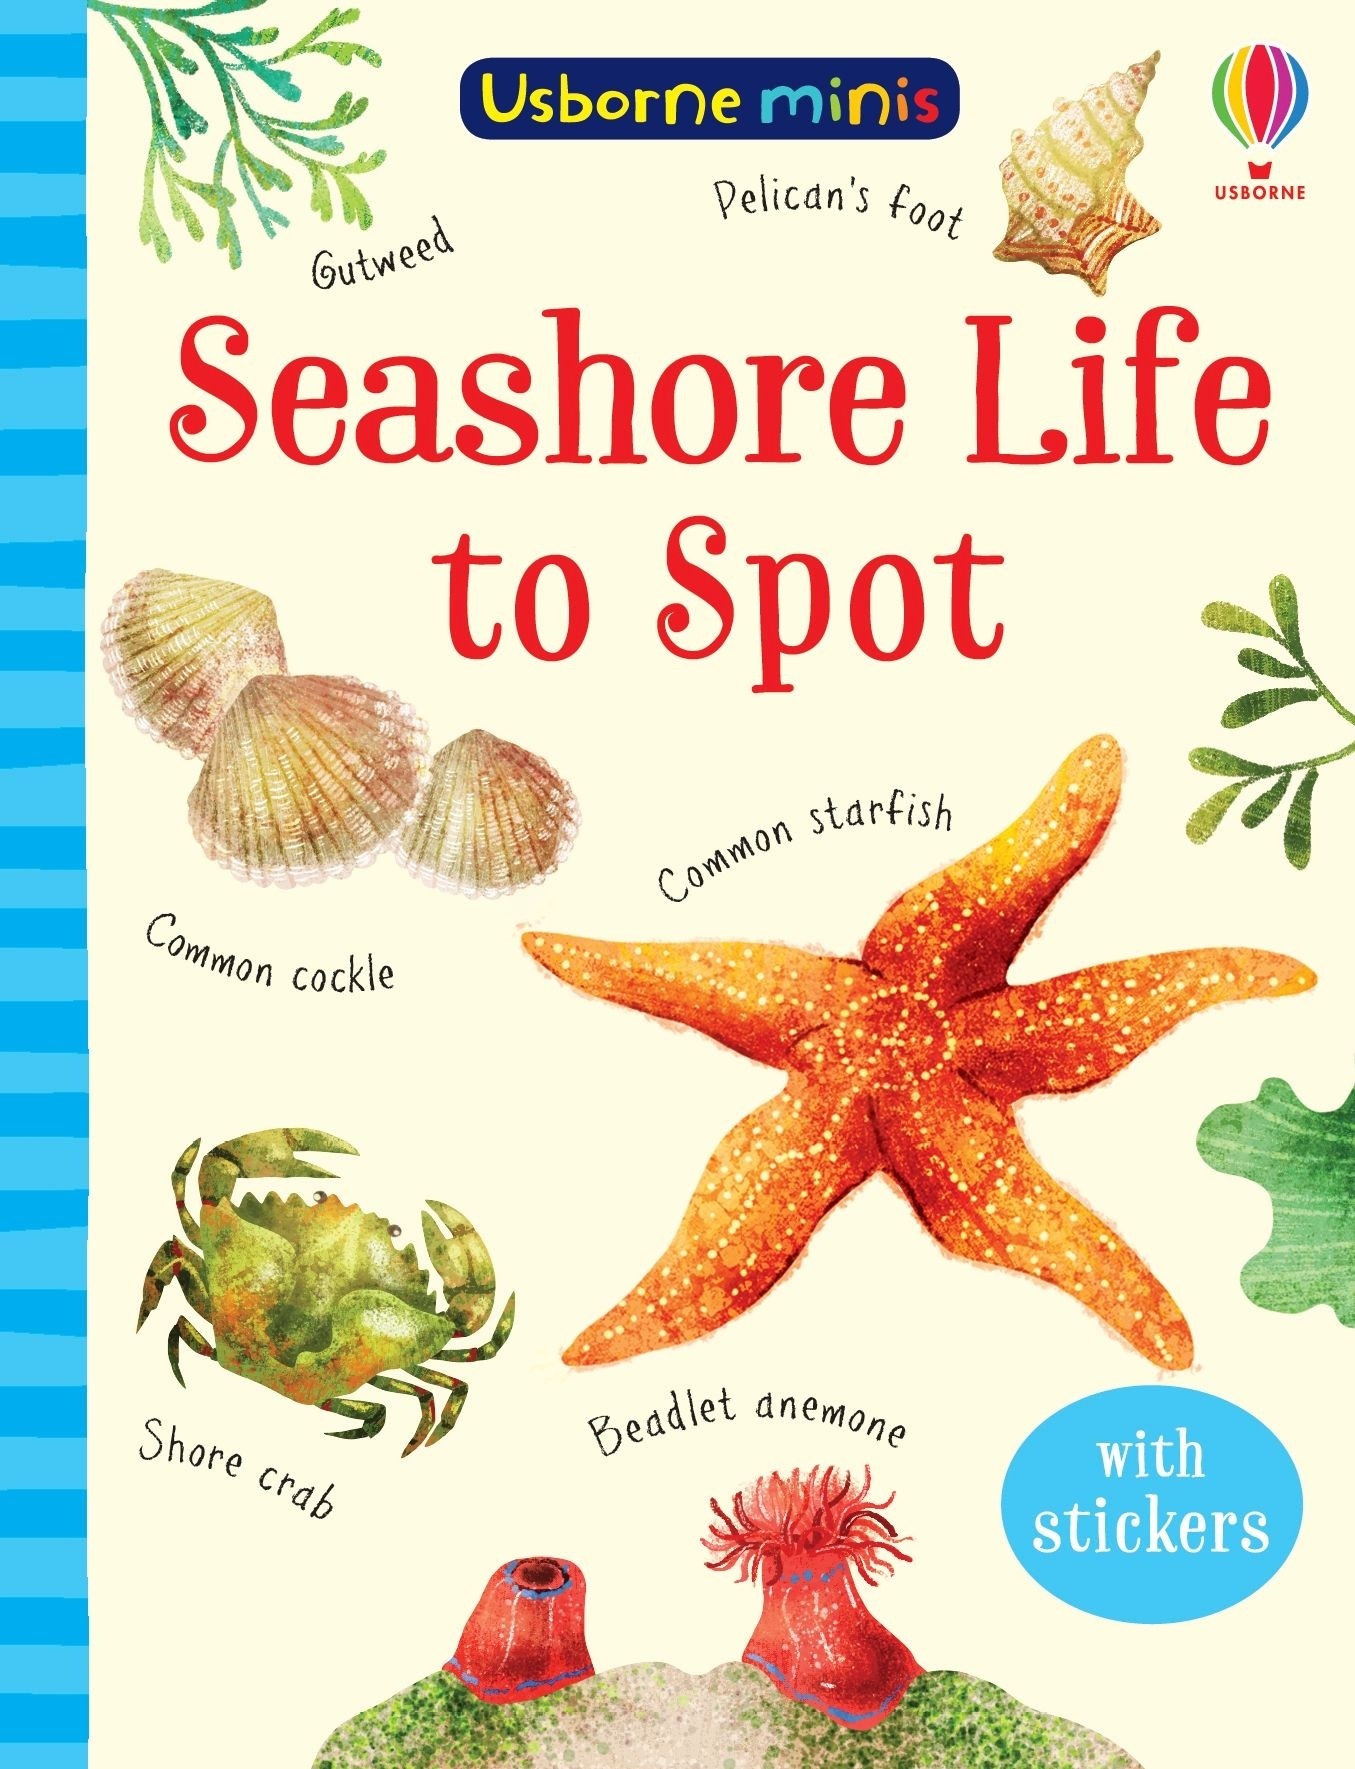 Seashore Life to Spot